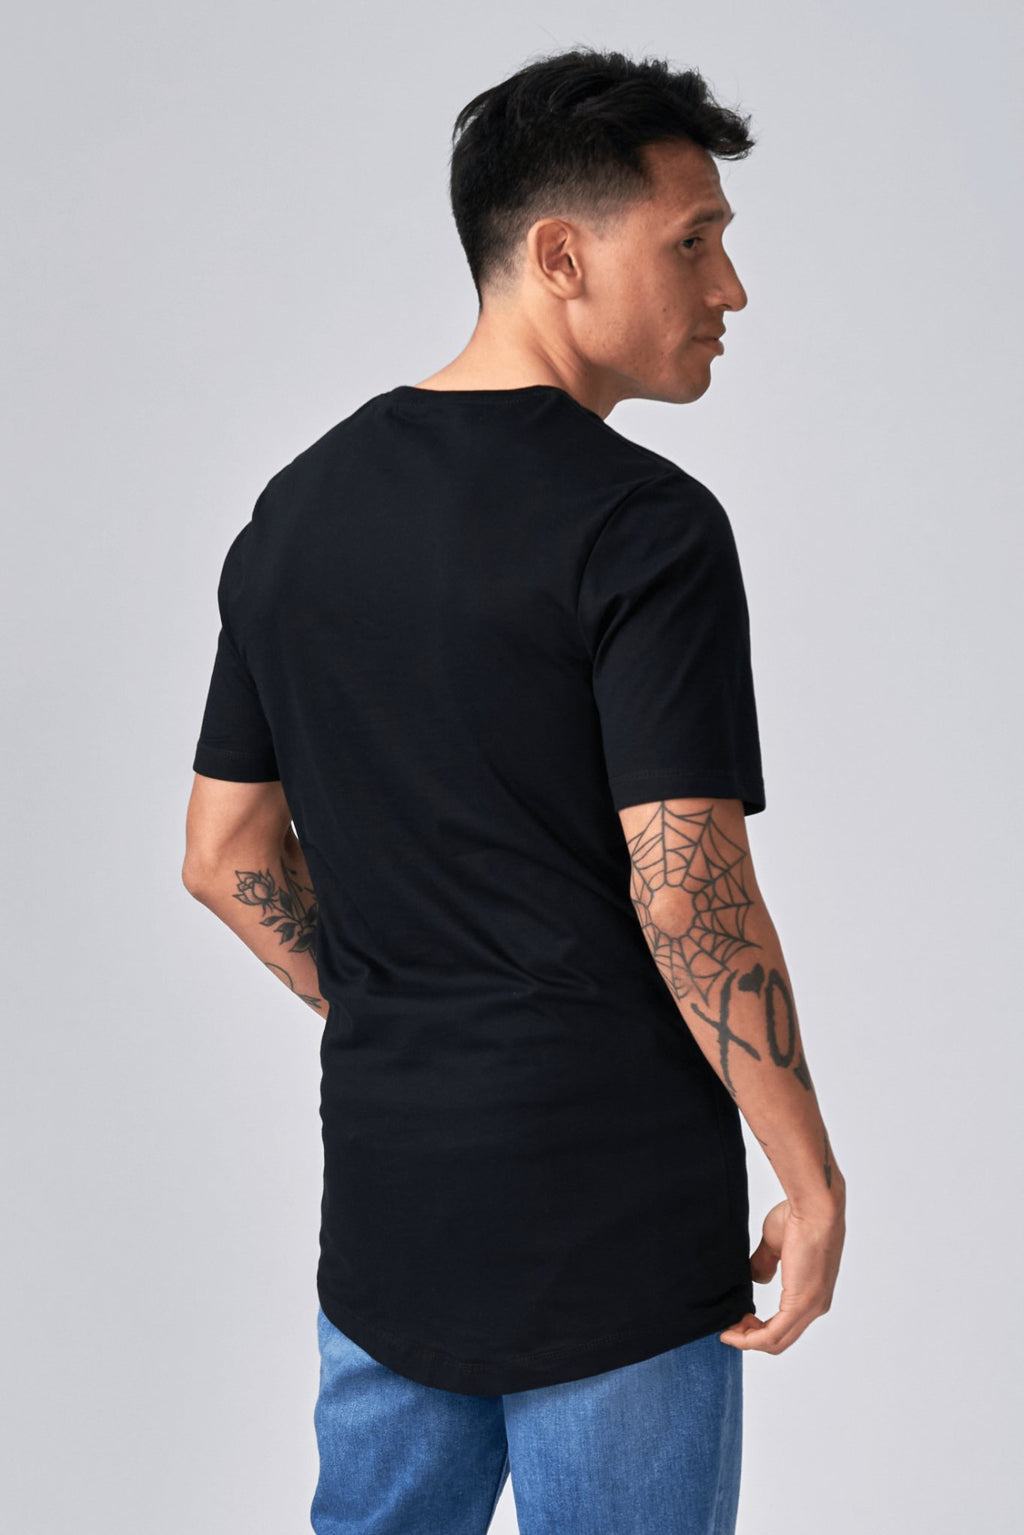 Camiseta larga - Negro